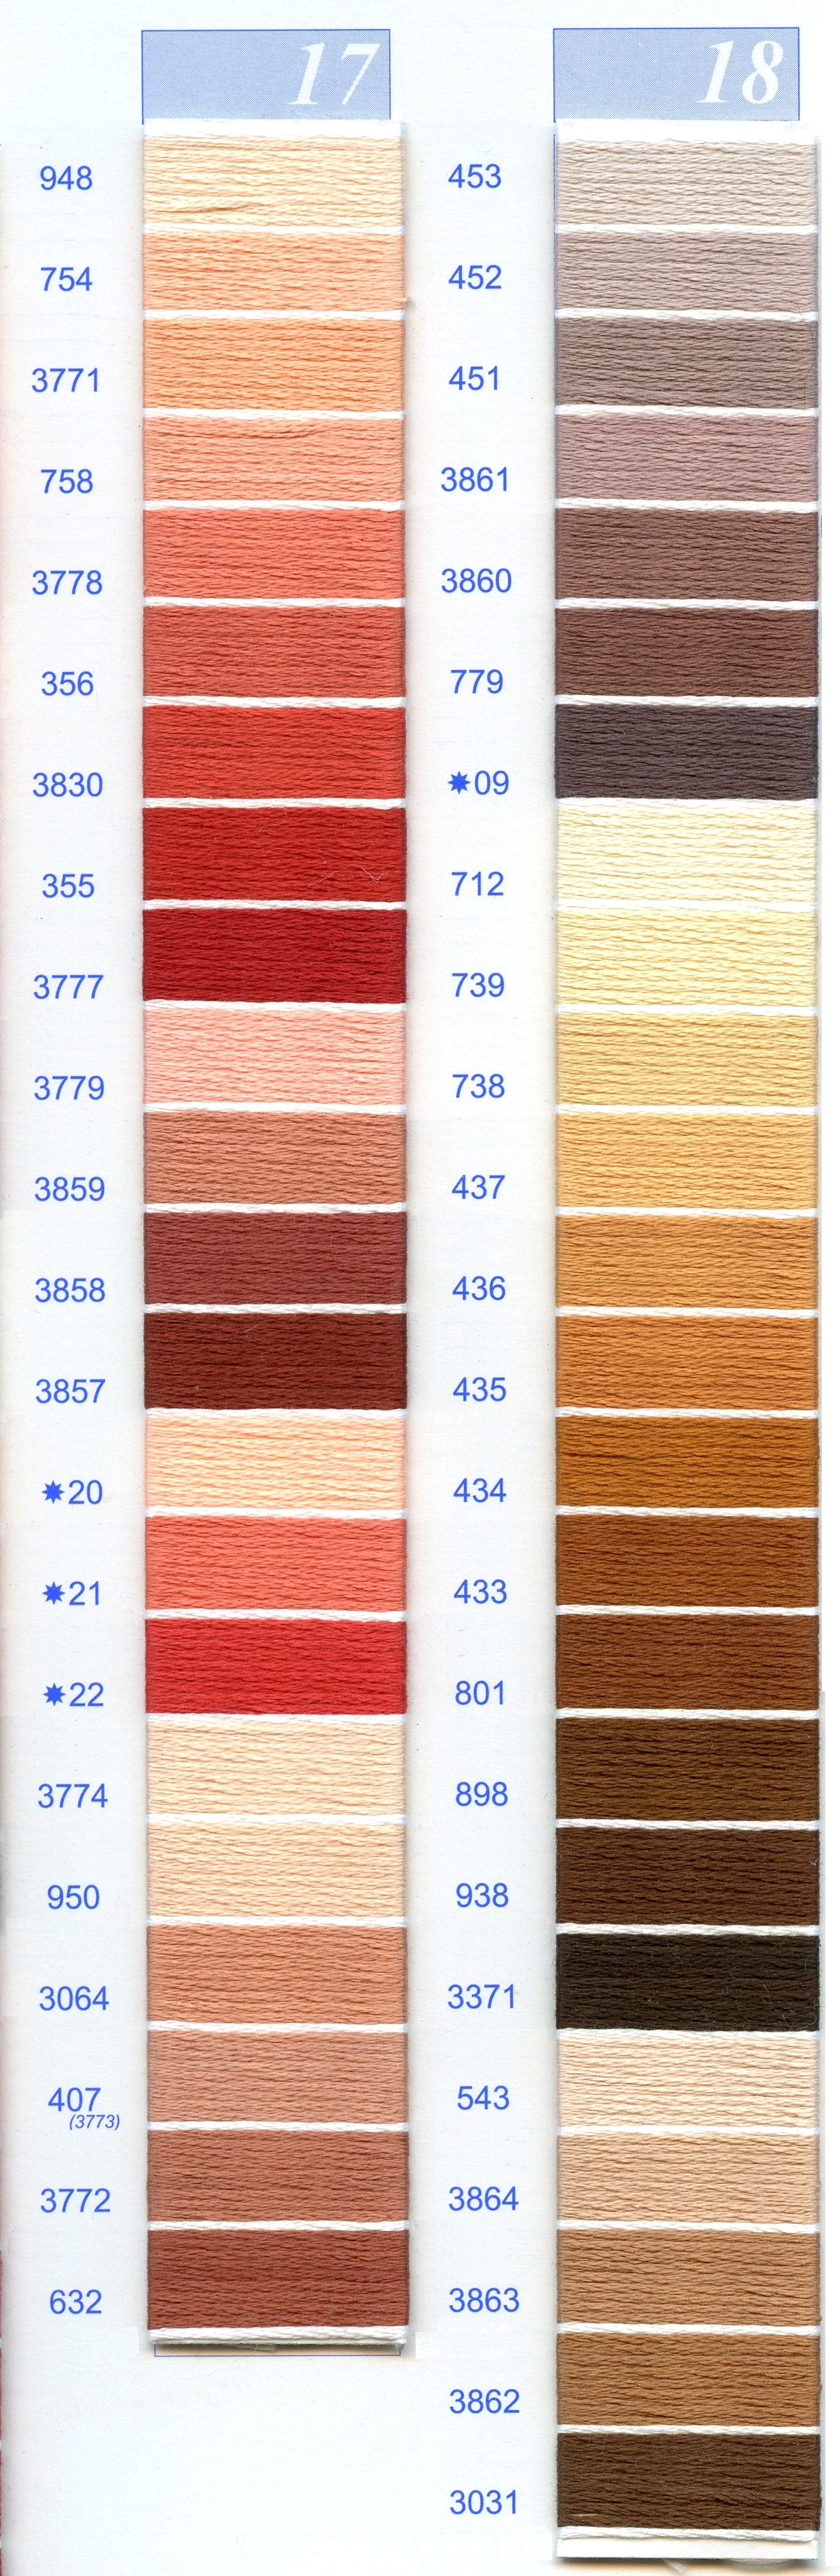 DMC Embroidery Floss Chart - Columns 17 & 18